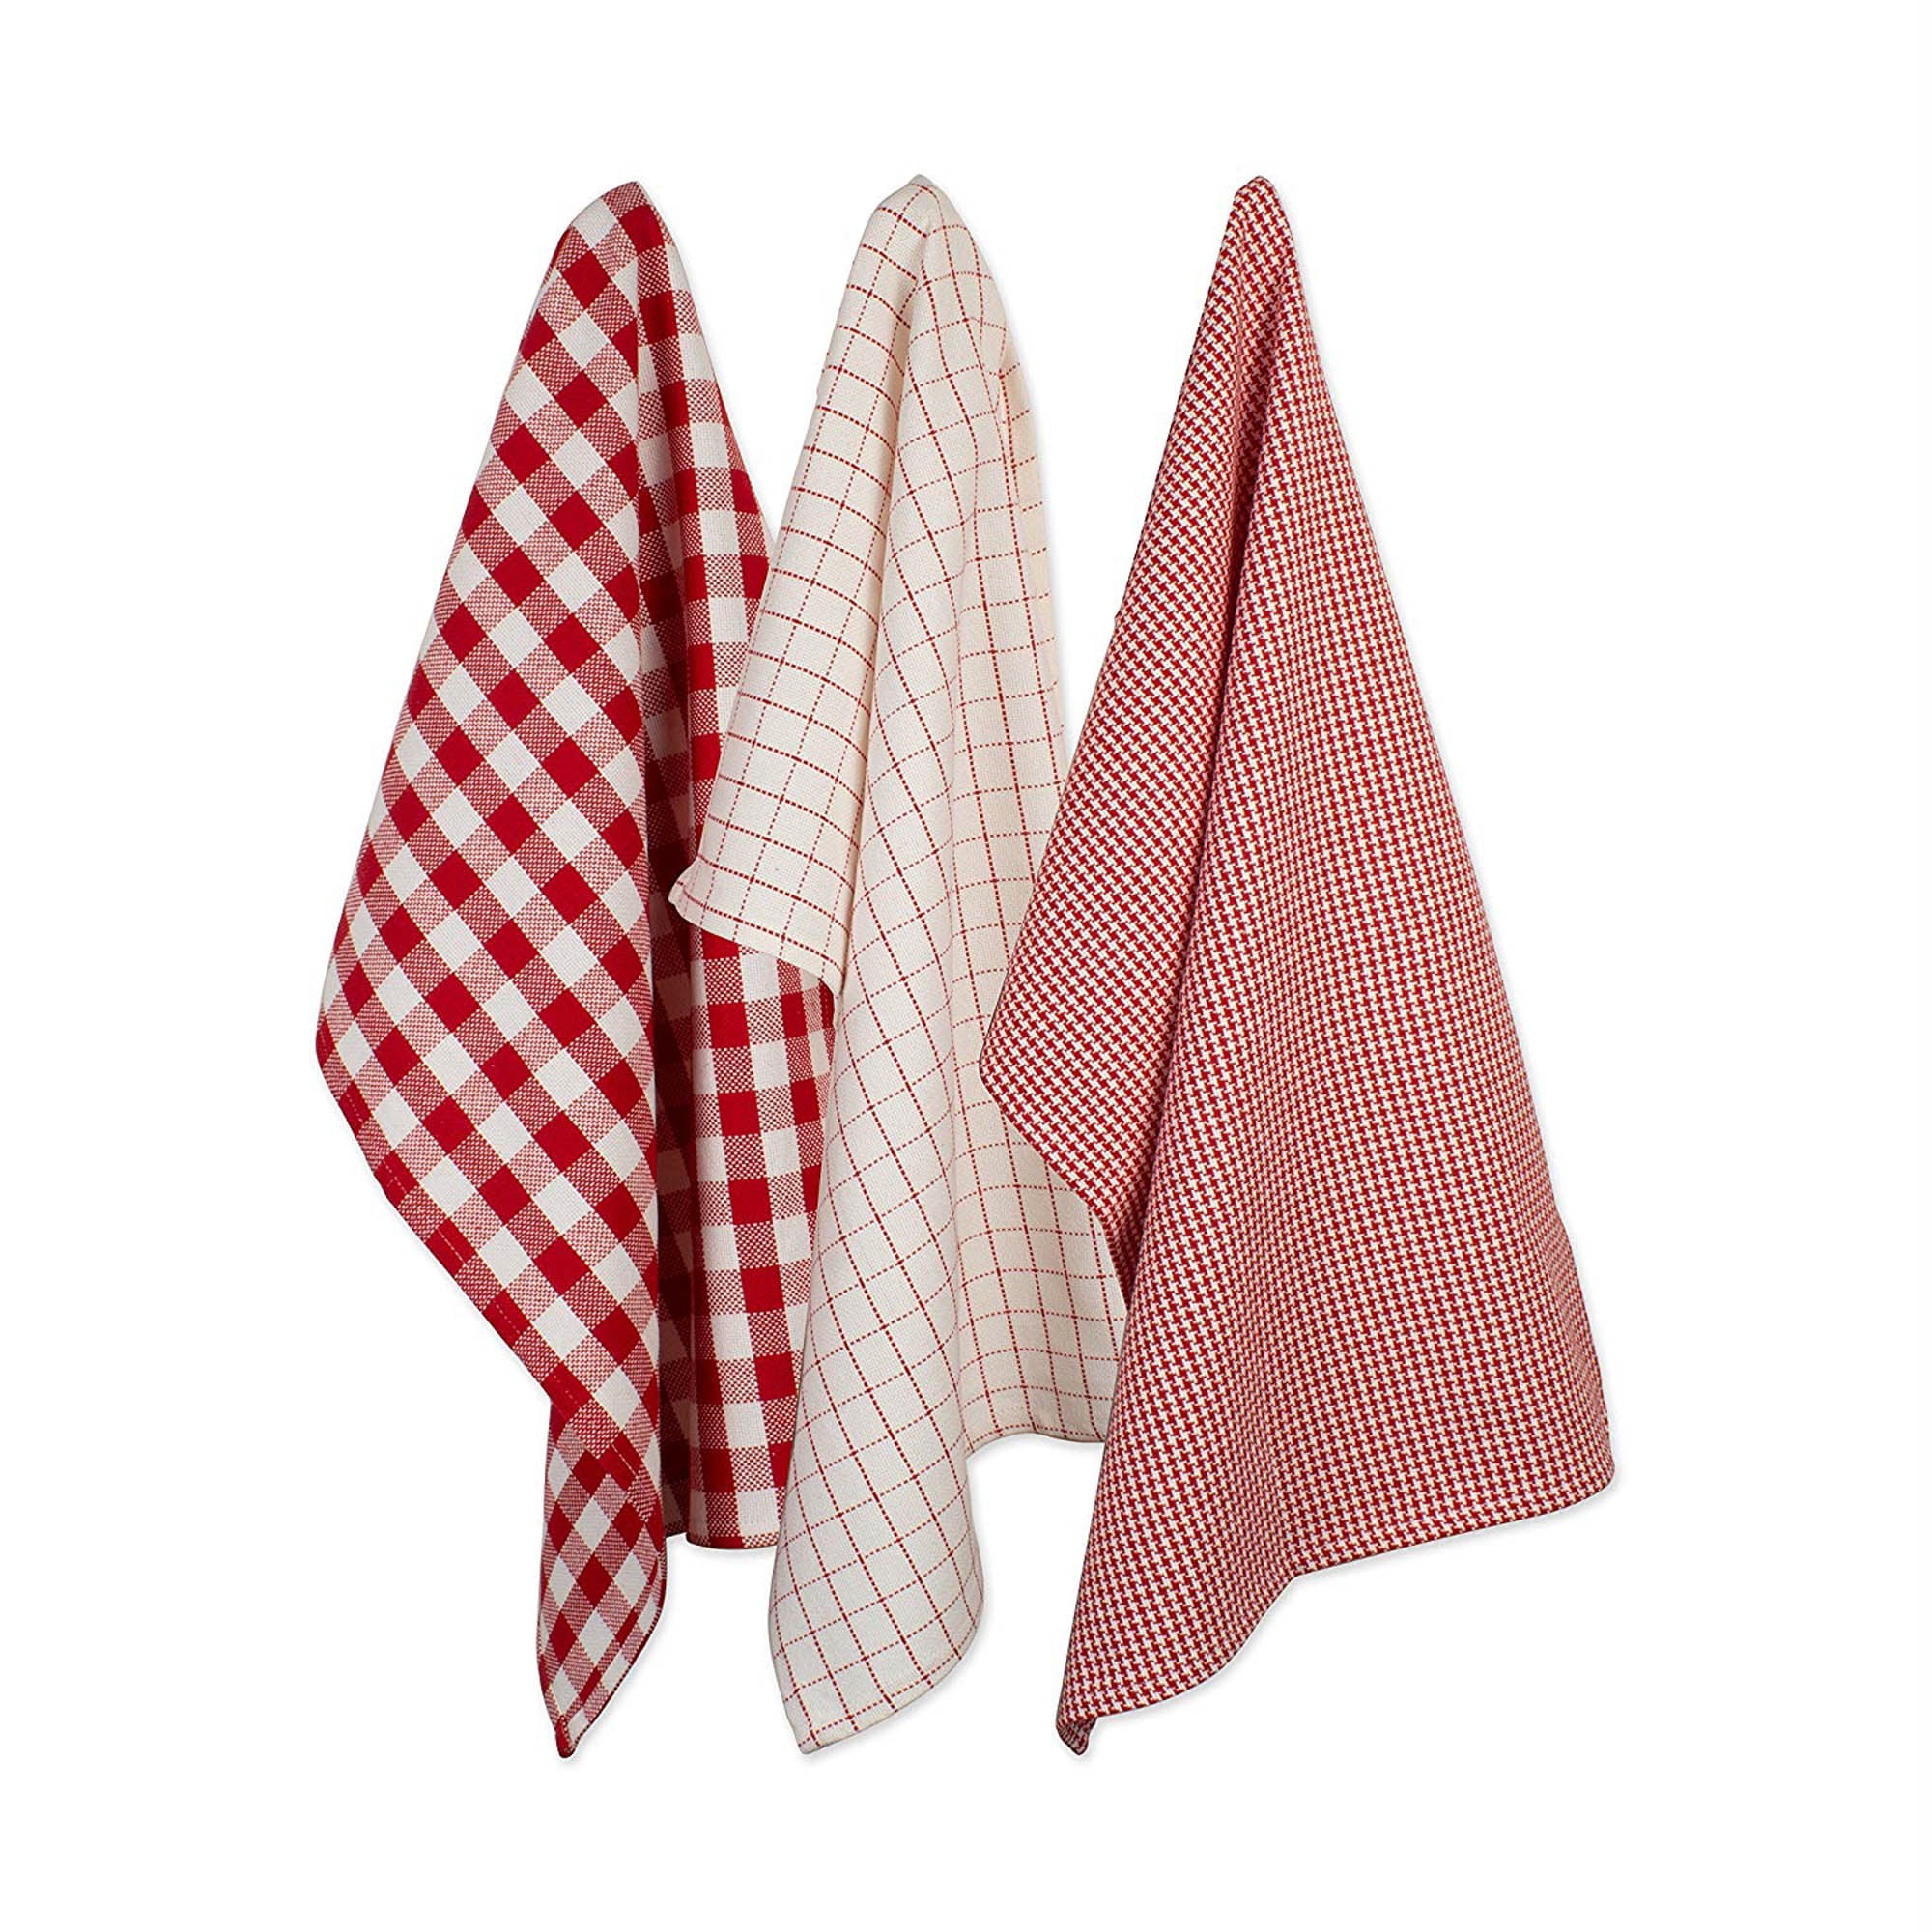 Design Imports Camz10660 Holiday Checks Heavyweight Dish Towel & Dishcloth Set - Set Of 6